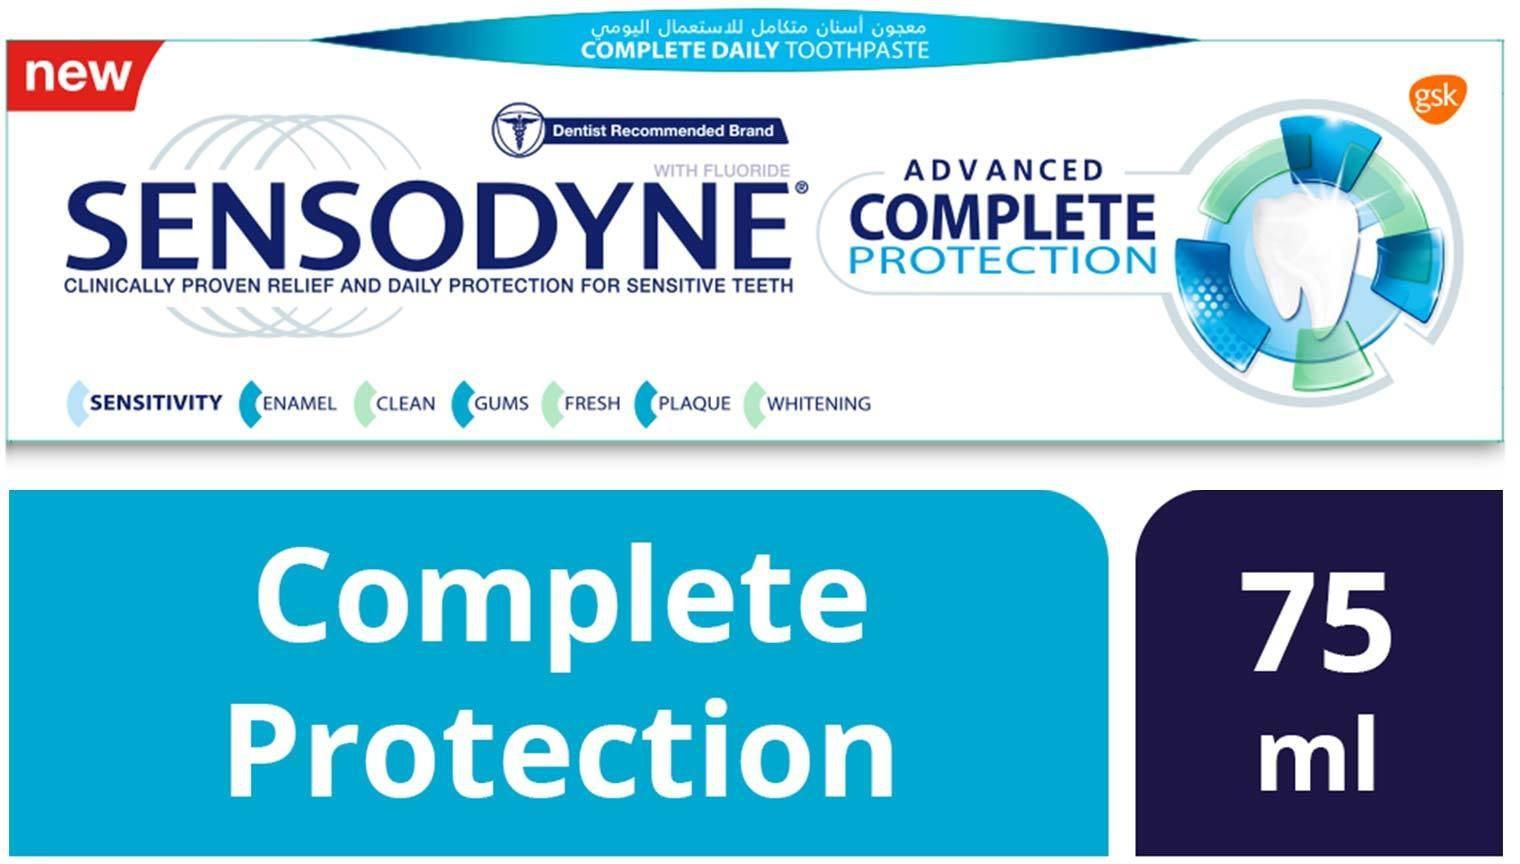 Sensodyne advanced complete protection toothpaste  75 ml